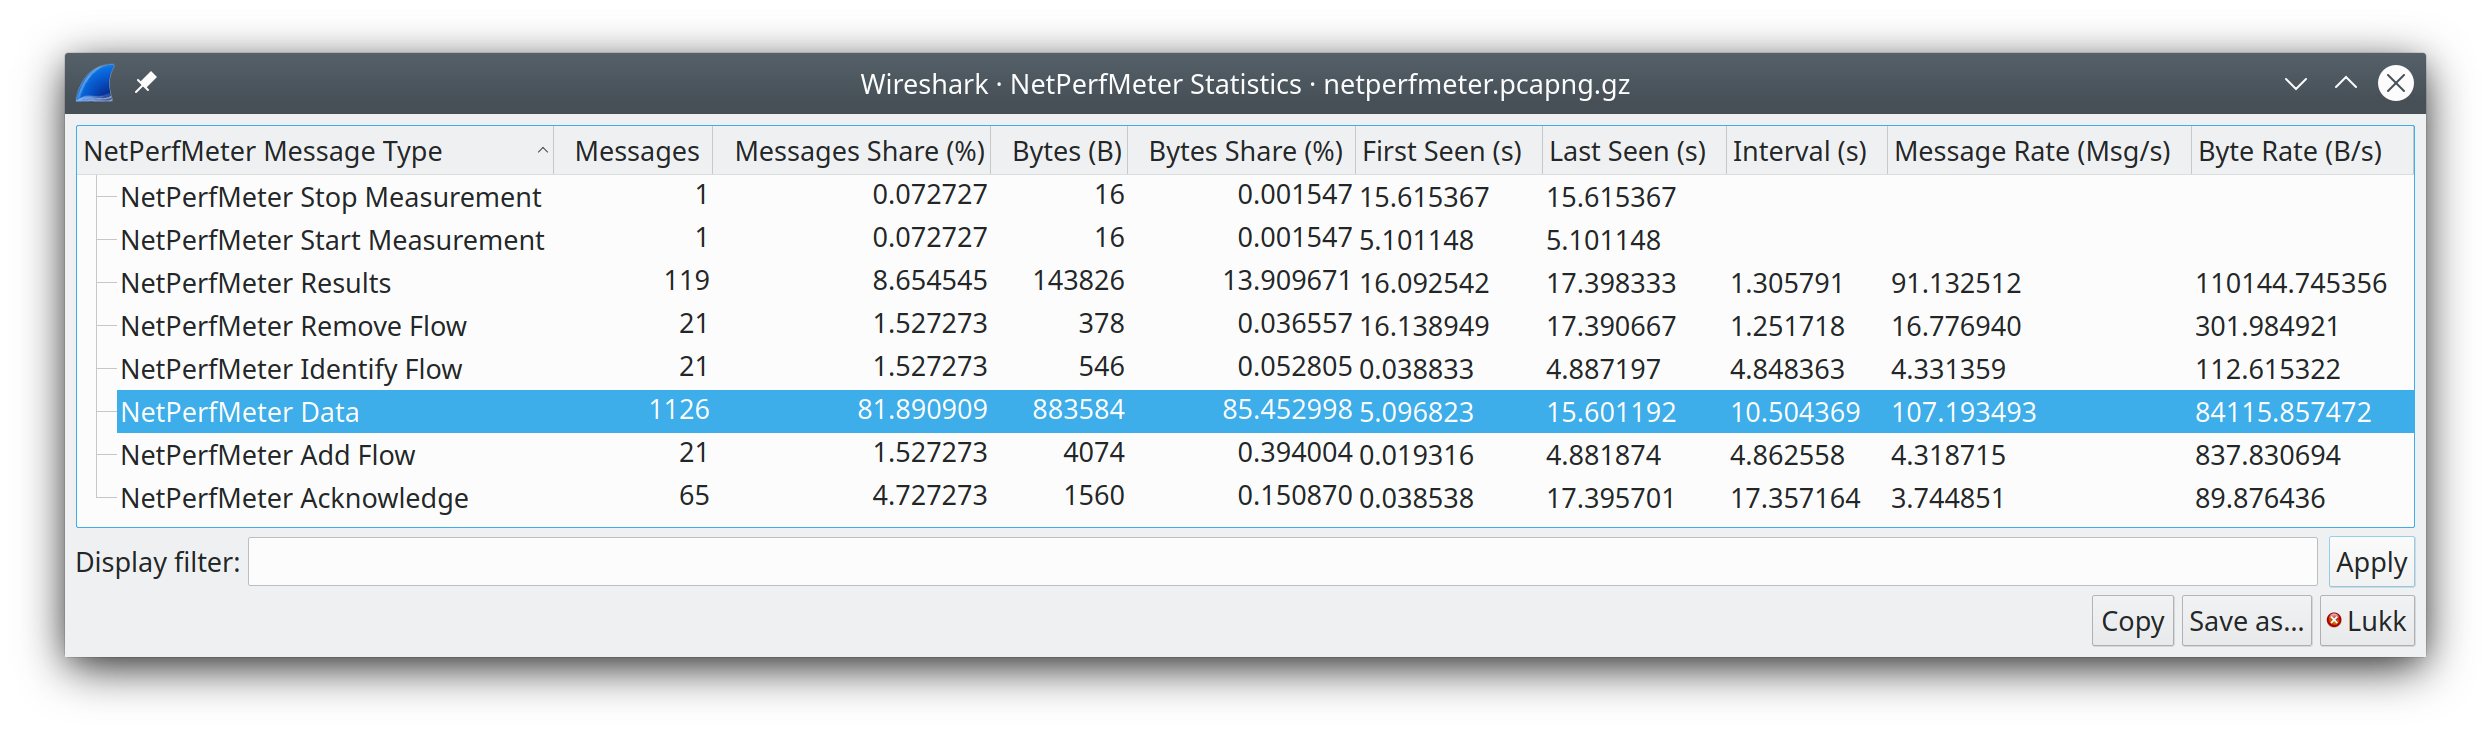 ws netperfmeter statistics